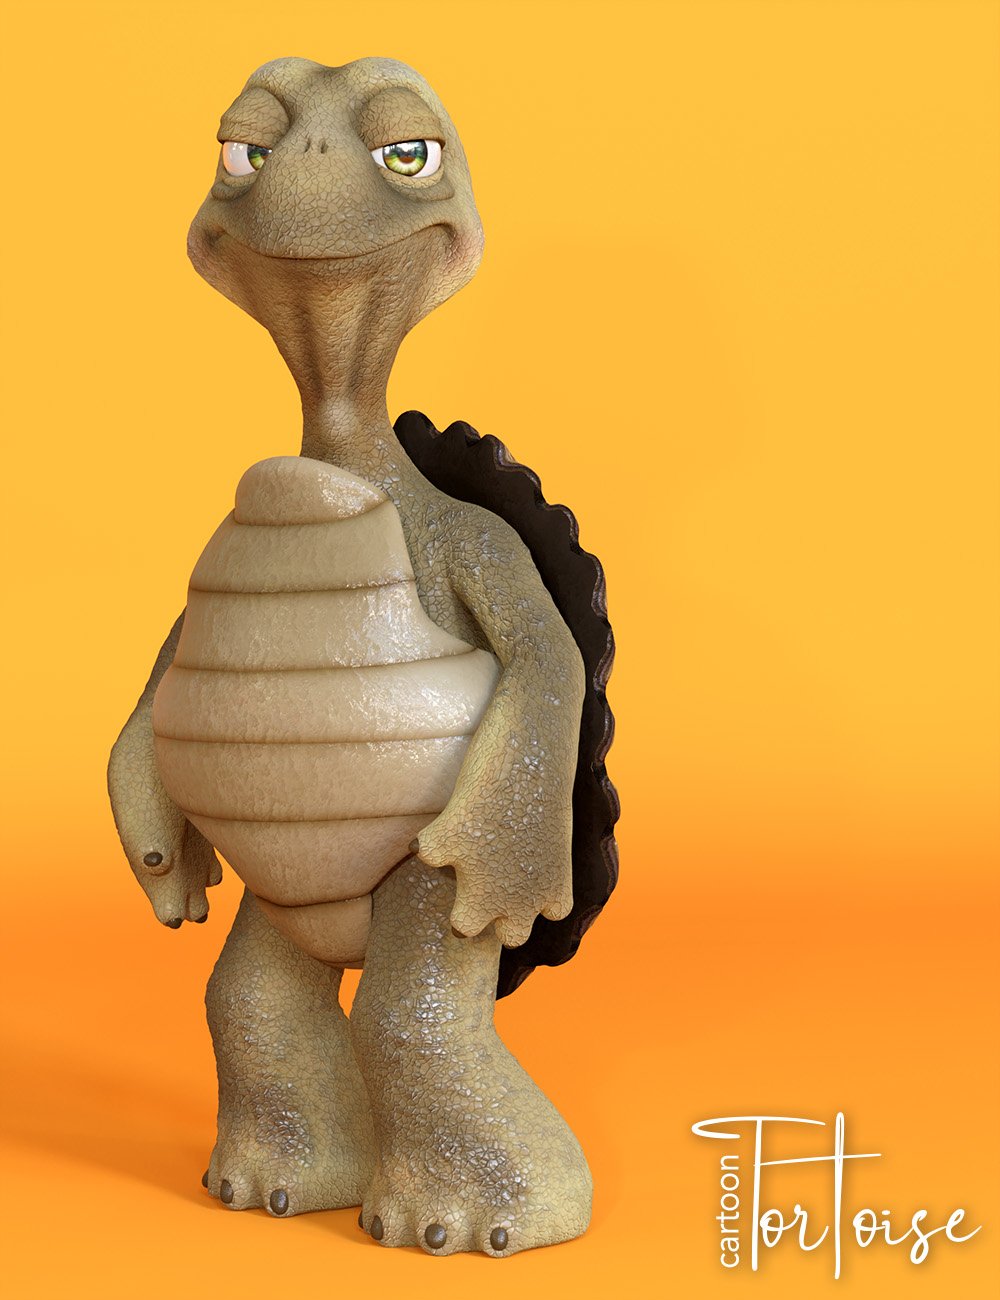 Tank the Cartoon Tortoise by: 3D Universe, 3D Models by Daz 3D